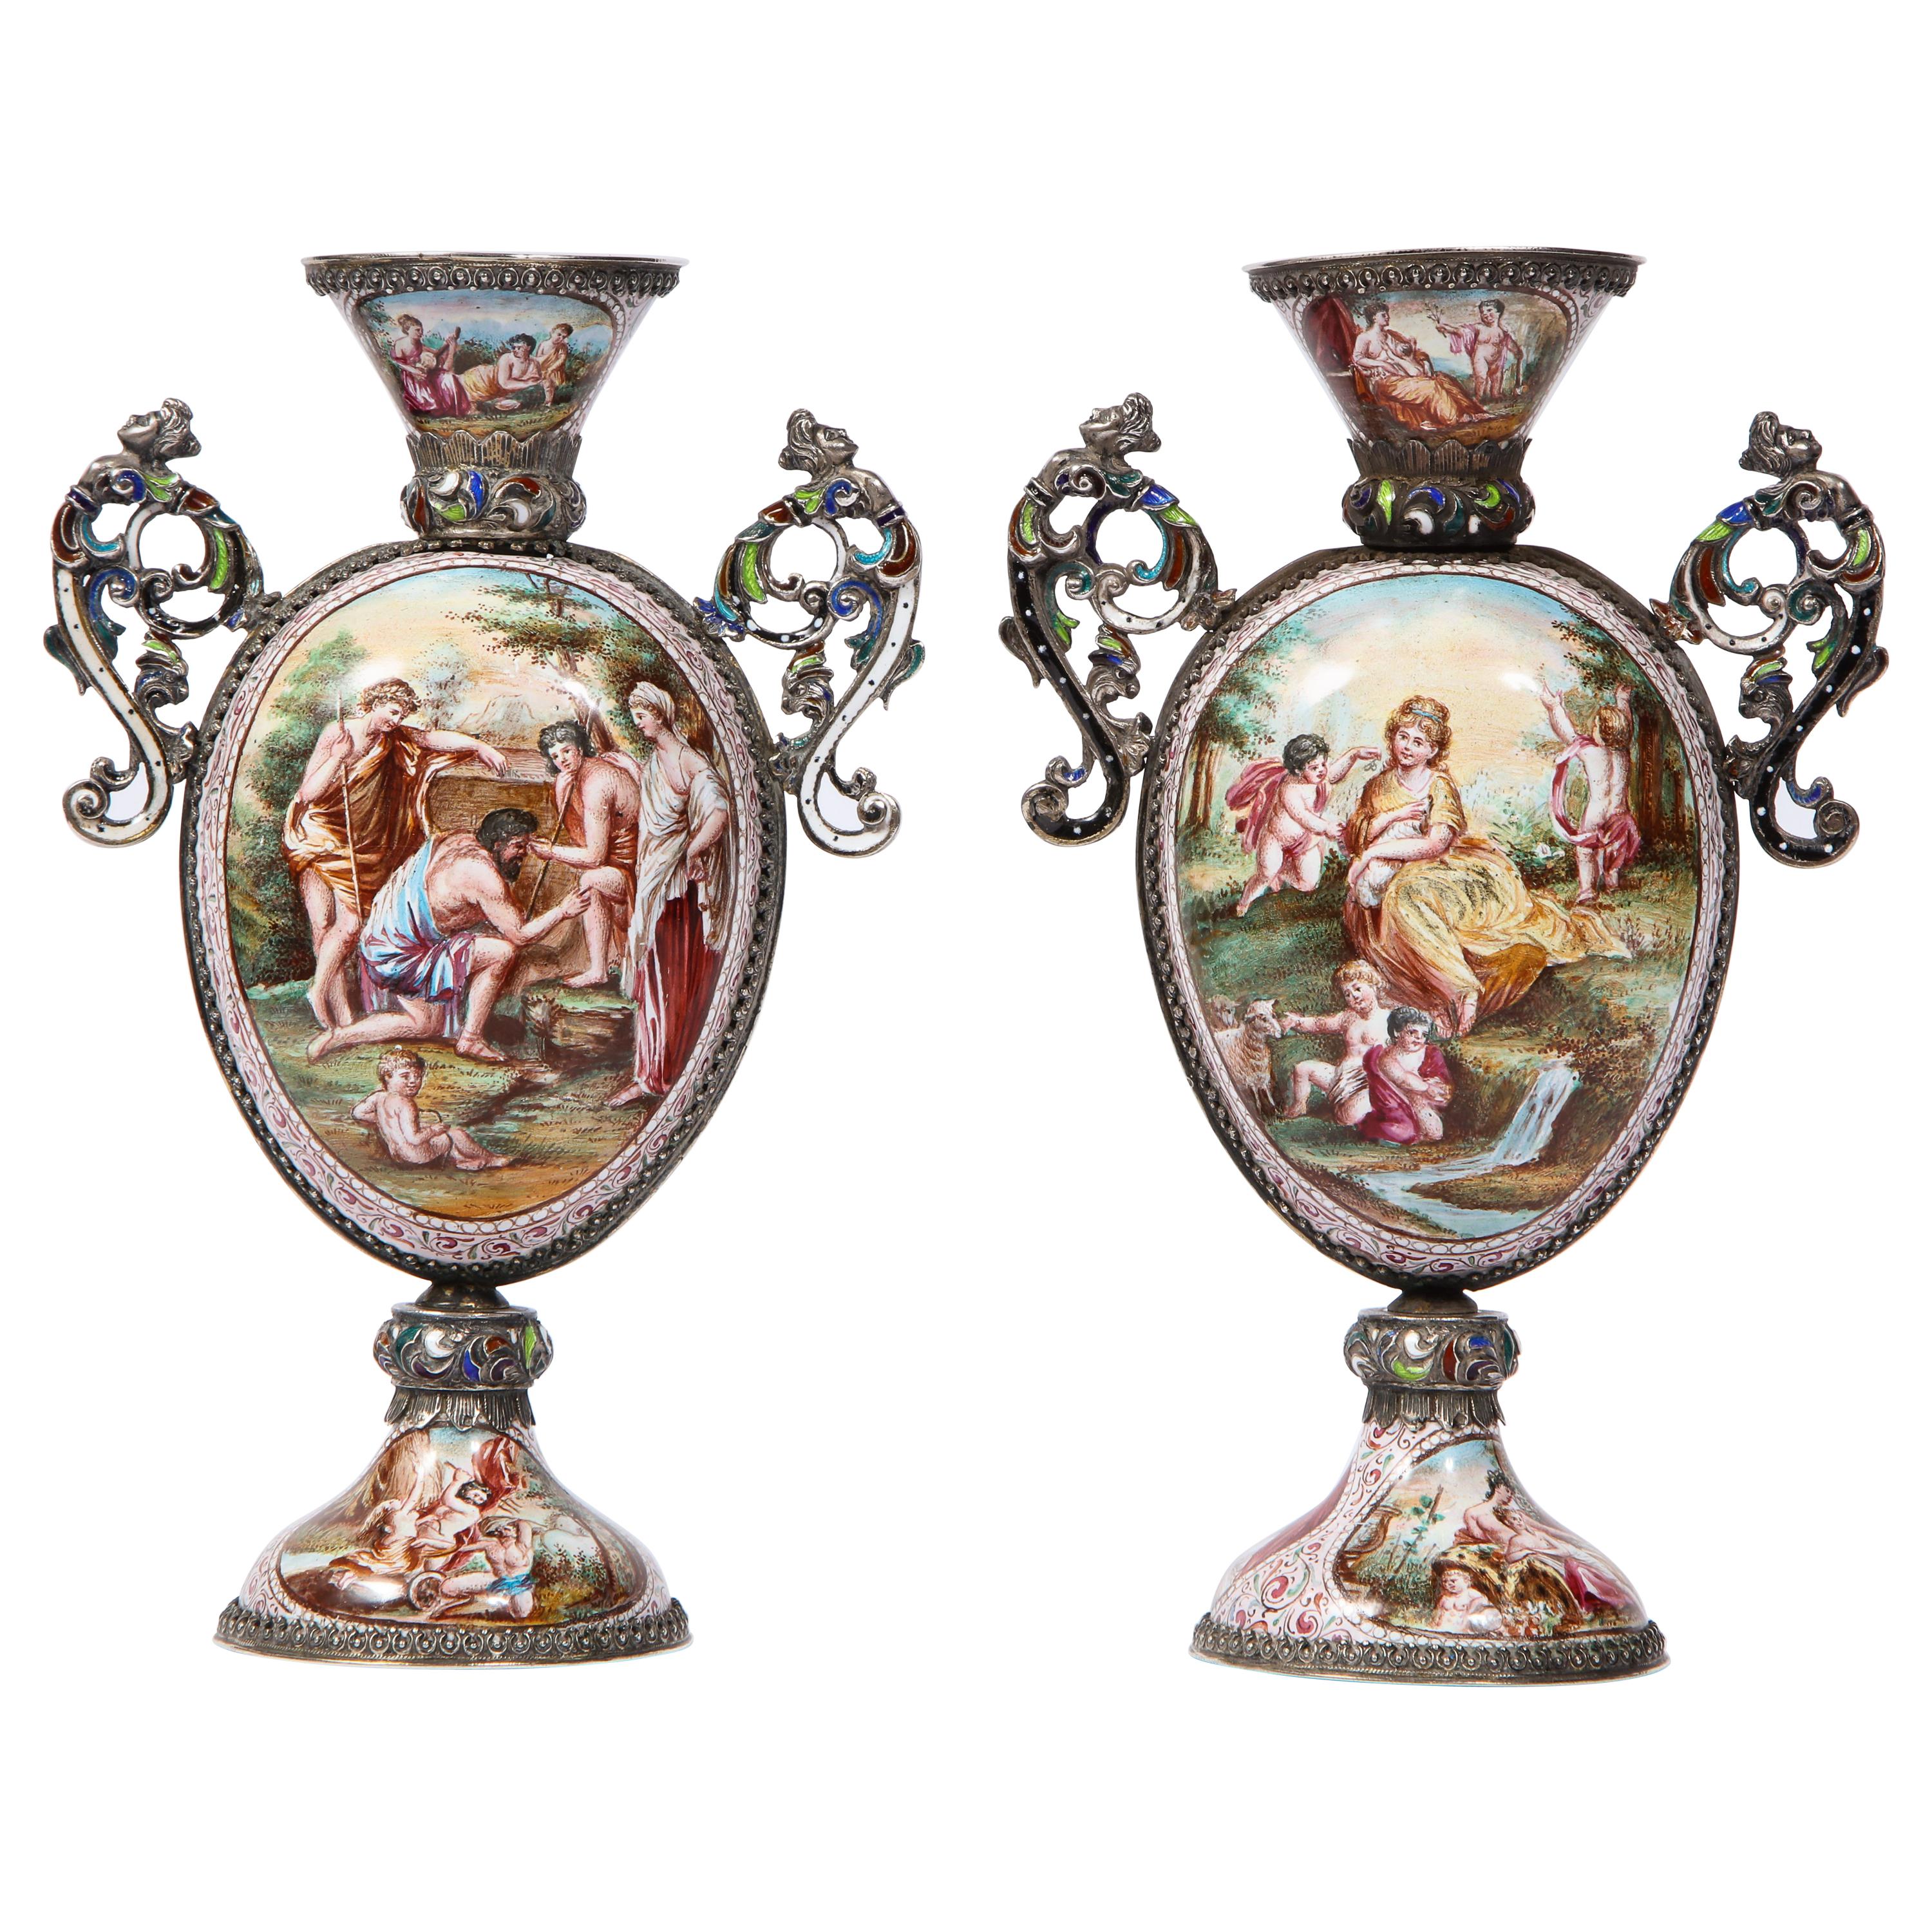 Pr. Viennese Enamel on Silver Vases with Mythological Scenes Signed Hallmarks HB